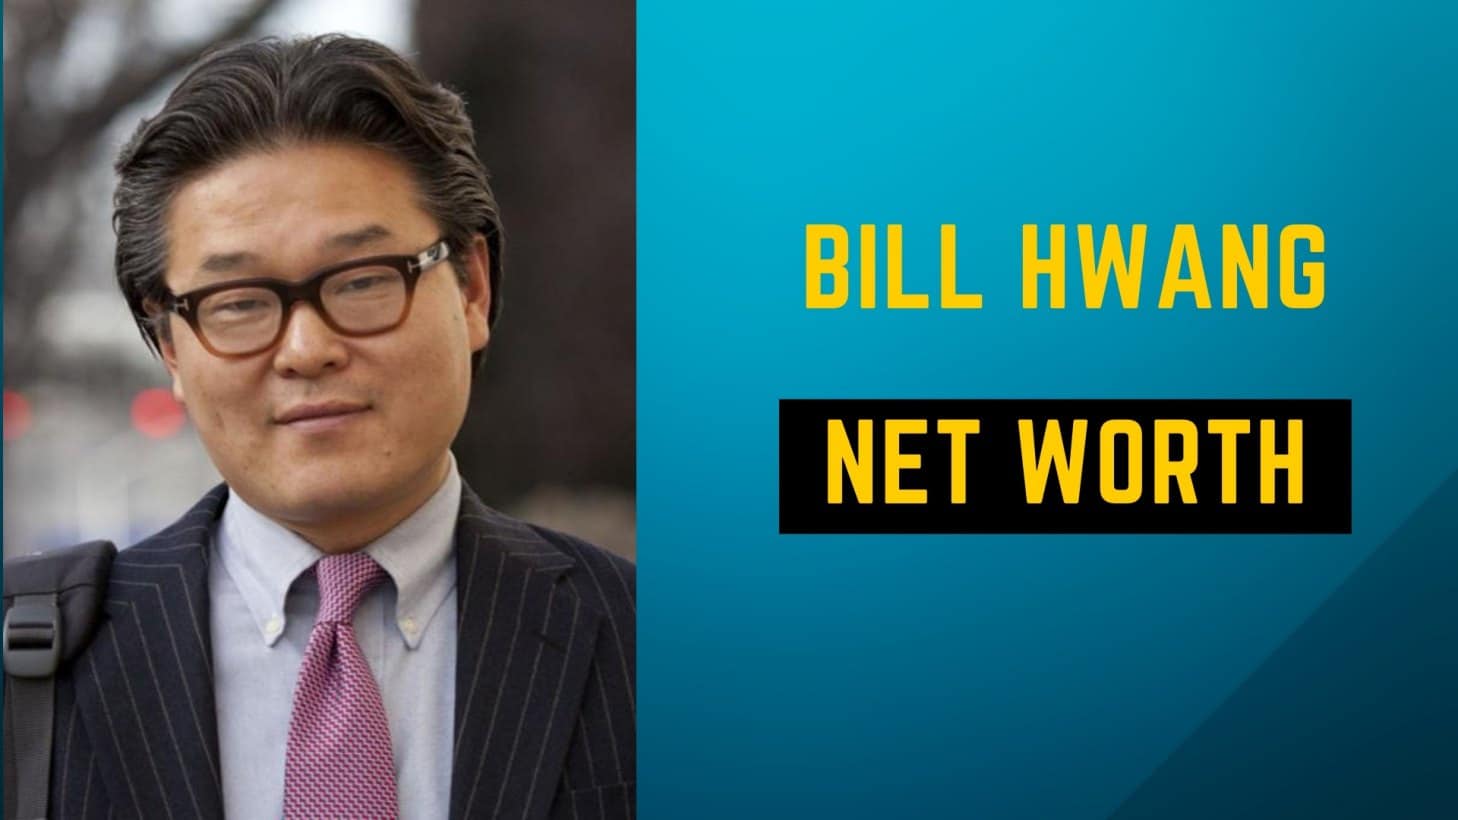 Markets Archegos Owner Bill Hwang Net Worth